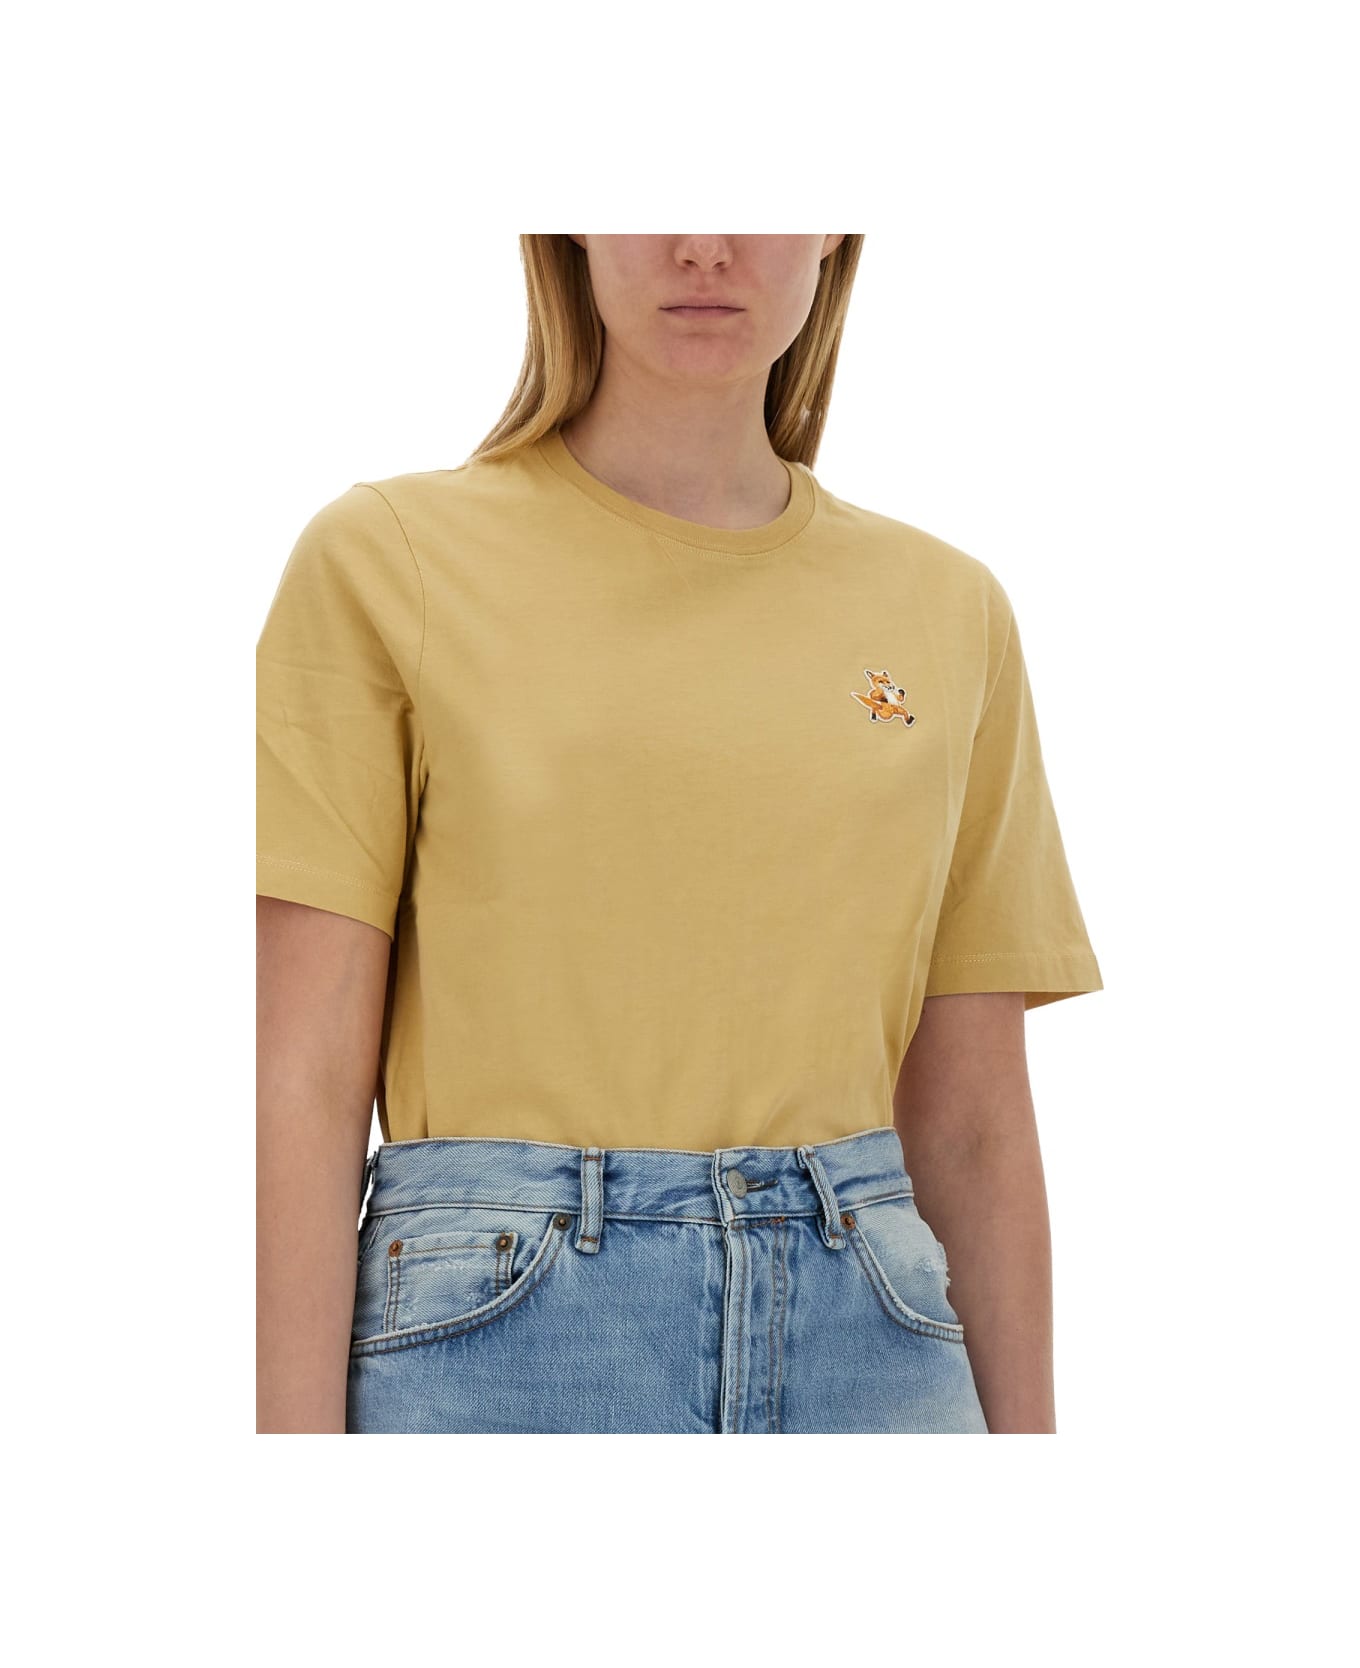 Maison Kitsuné "speedy Fox Patch" T-shirt - BEIGE Tシャツ